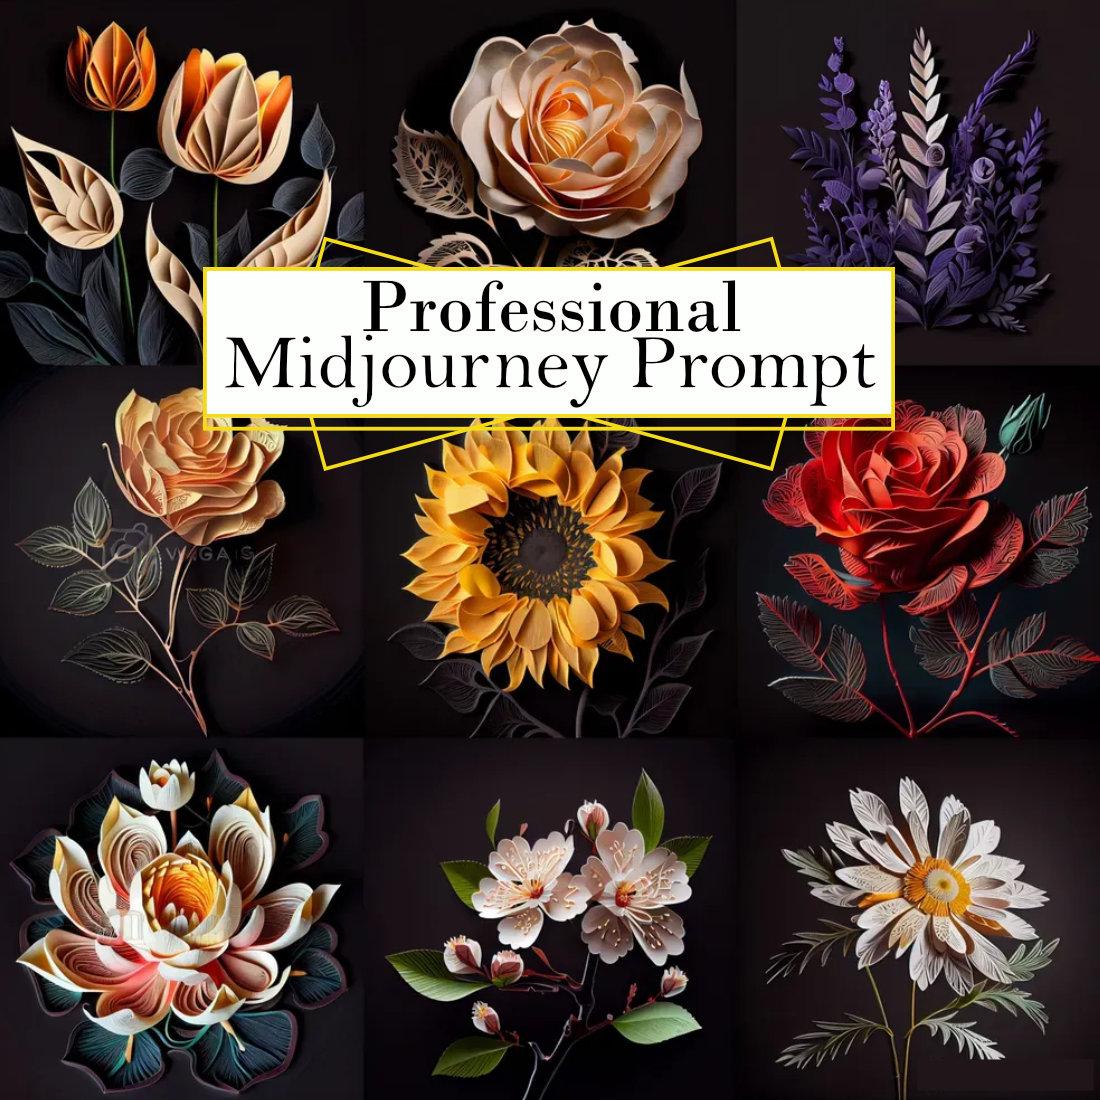 Papercut Art Flowers Midjourney Prompt cover image.